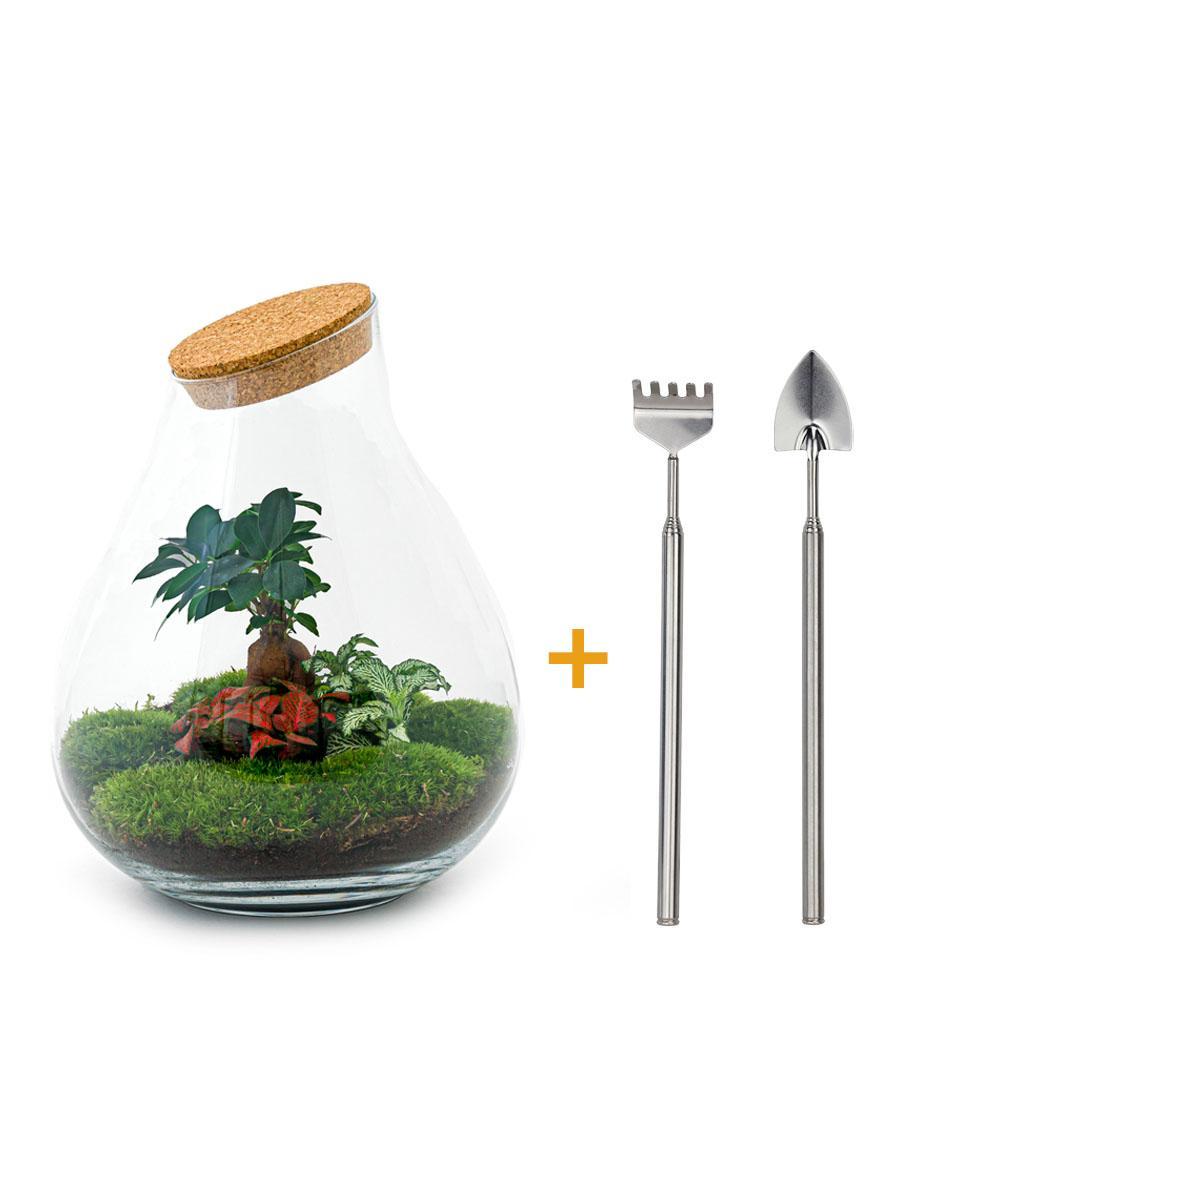 DIY terrarium - Drop XL Bonsai - ↑ 37 cm + Rake + Shovel